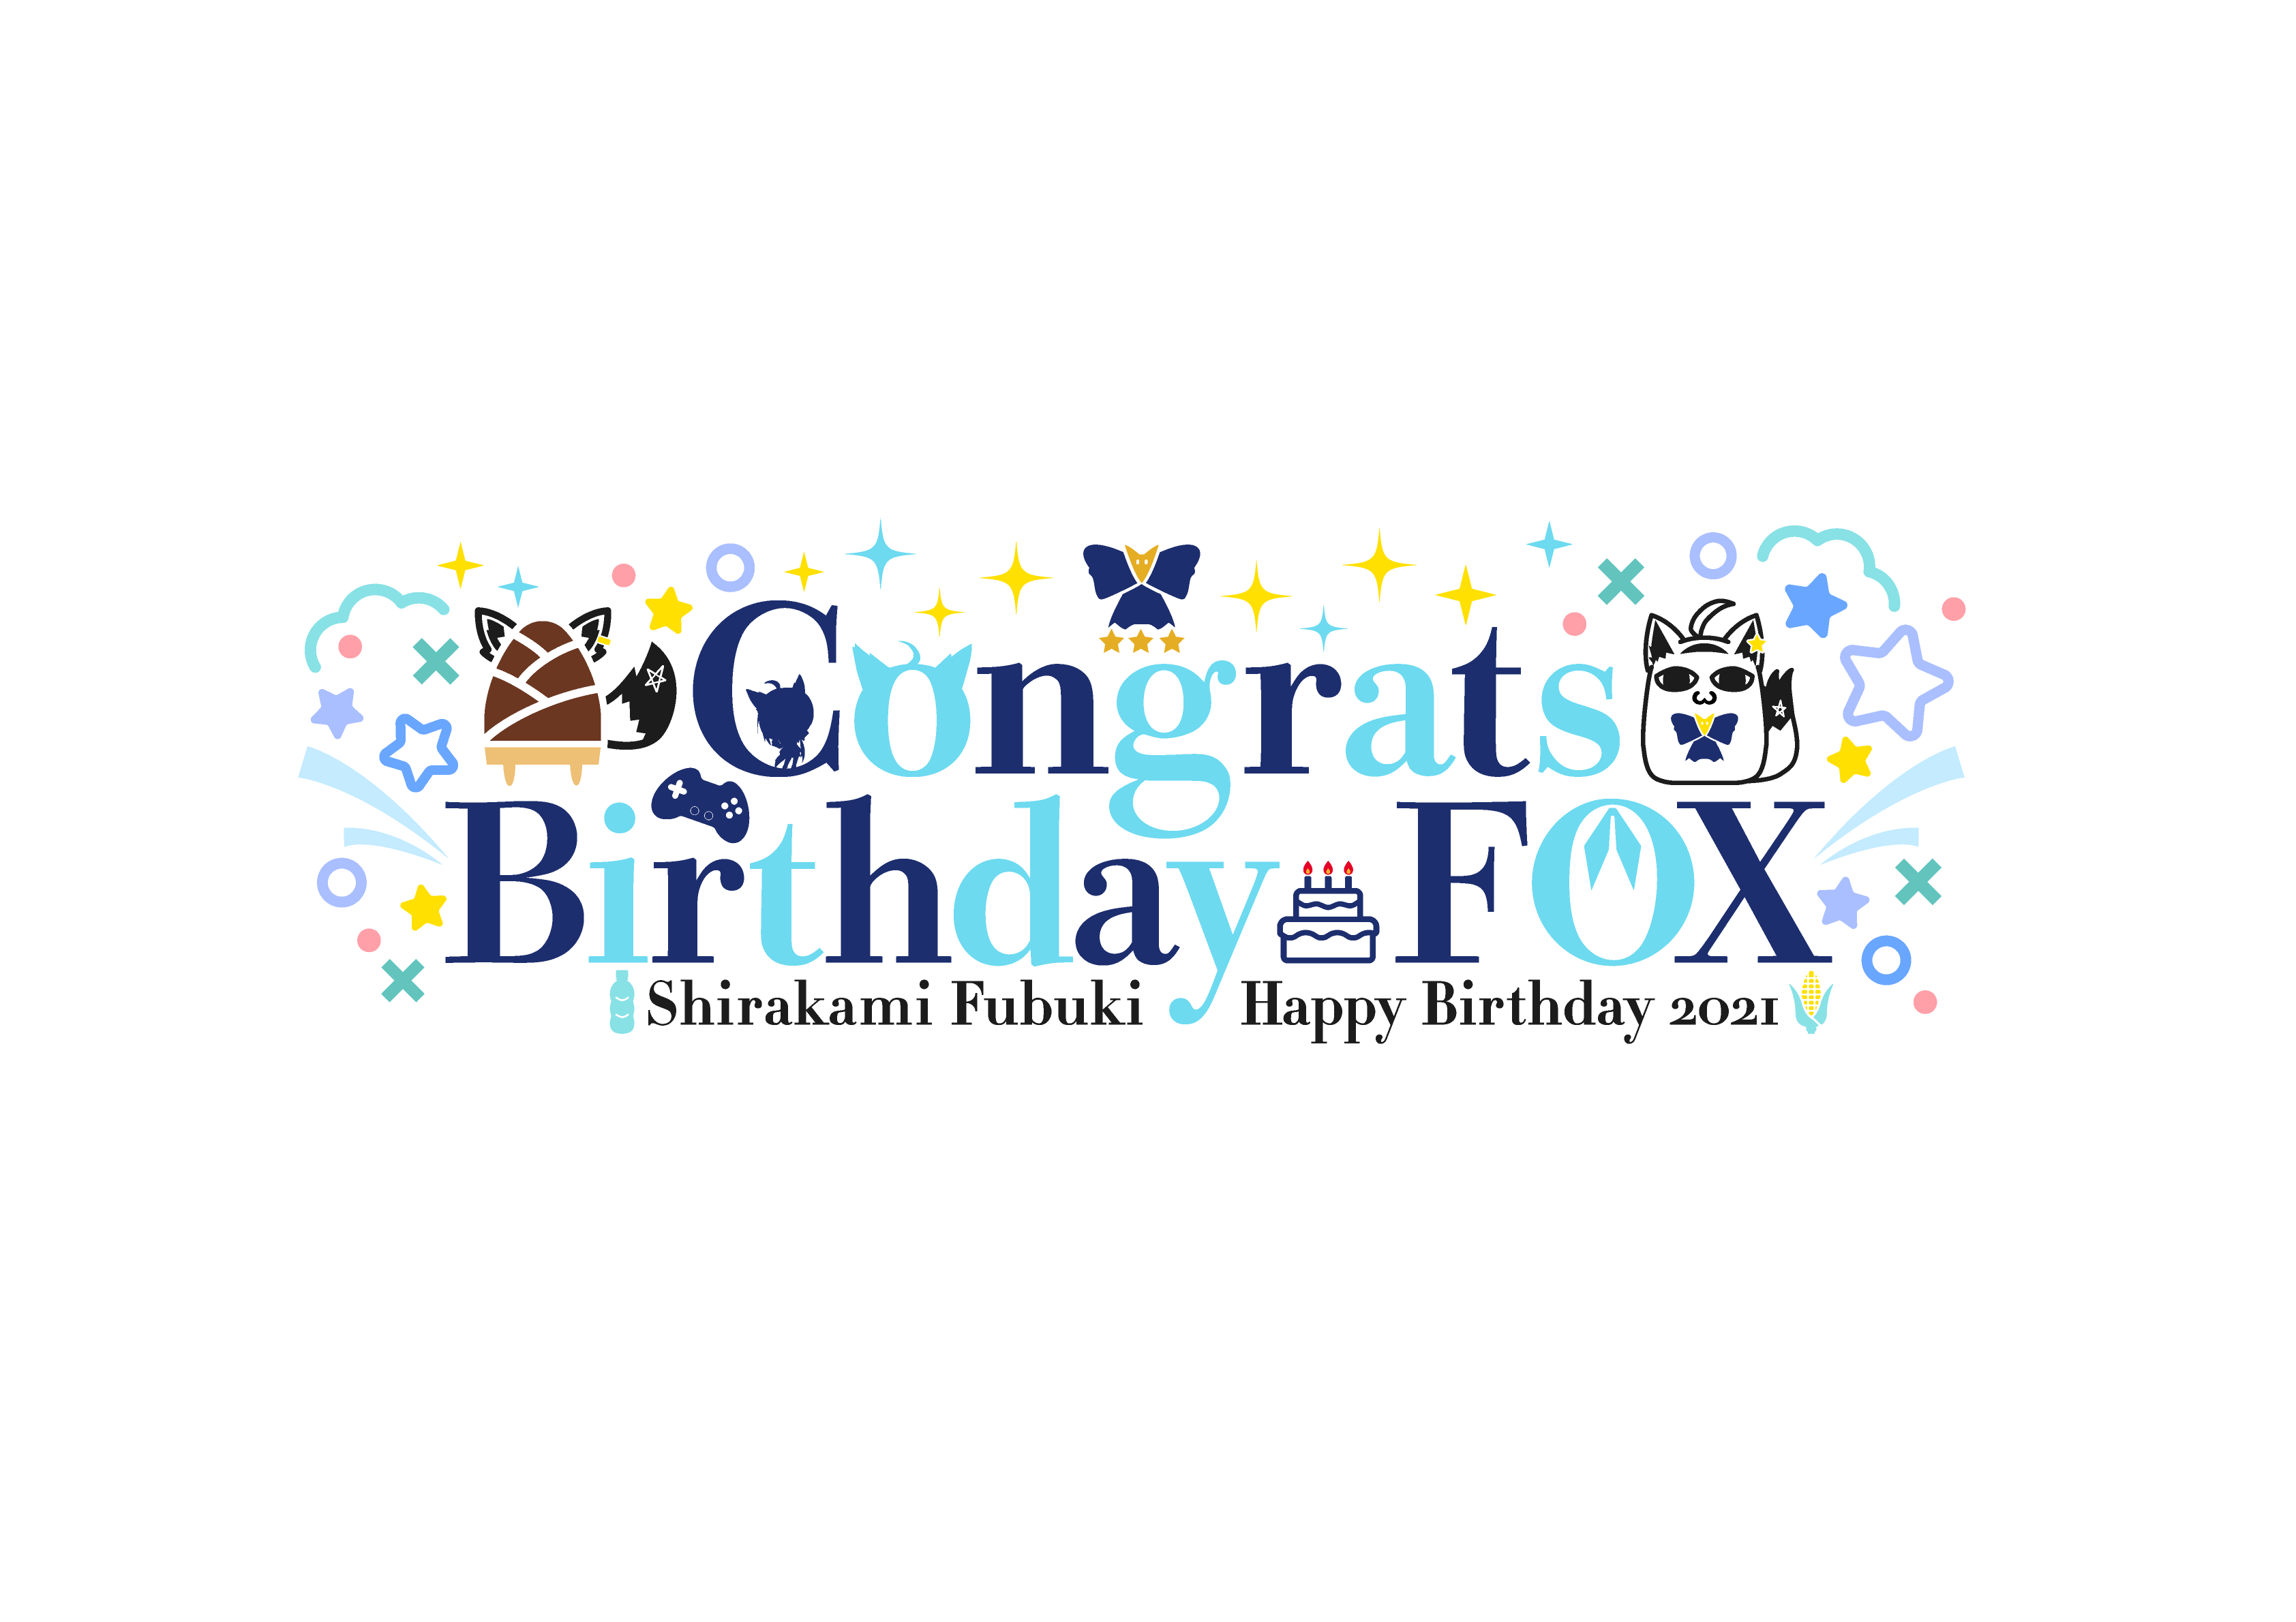 Congrats Birthday FOX